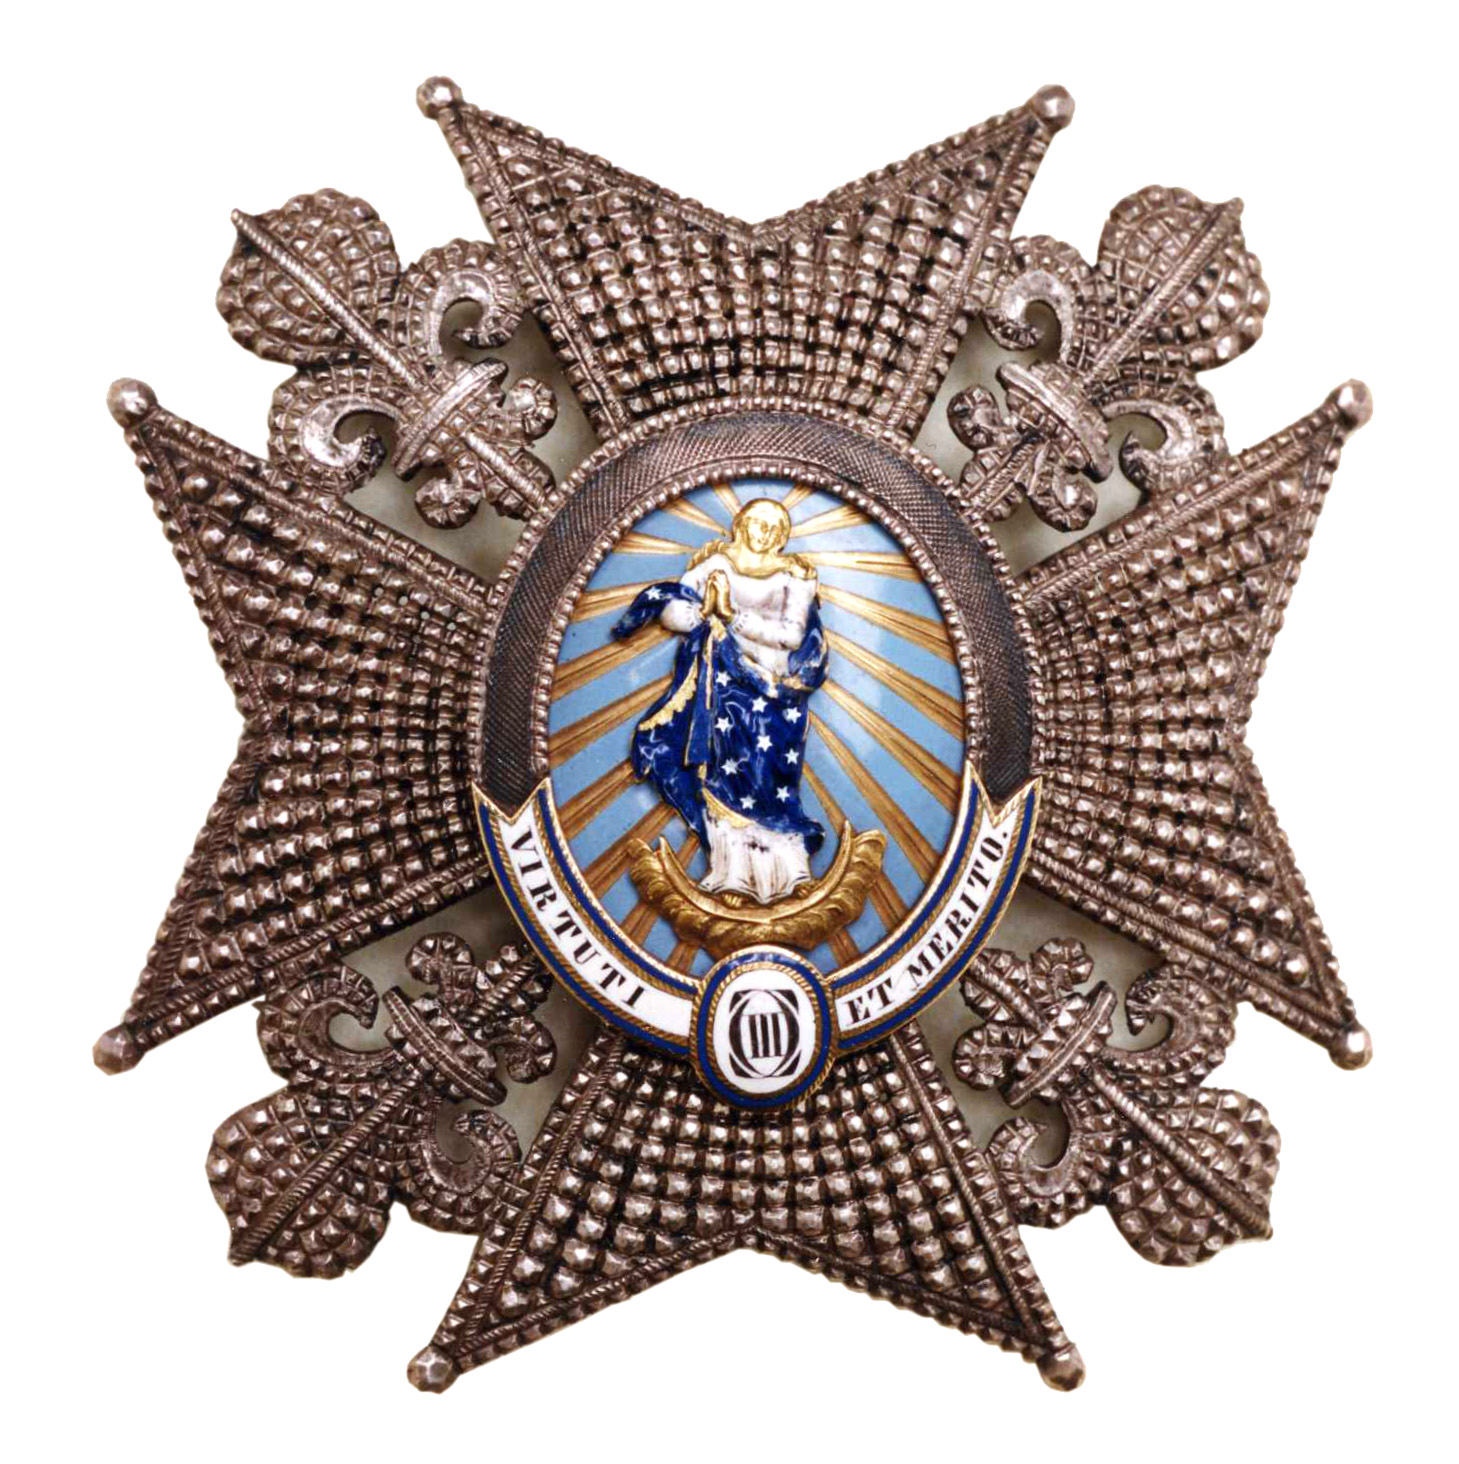 Distinguished Royal Order of Carlos III